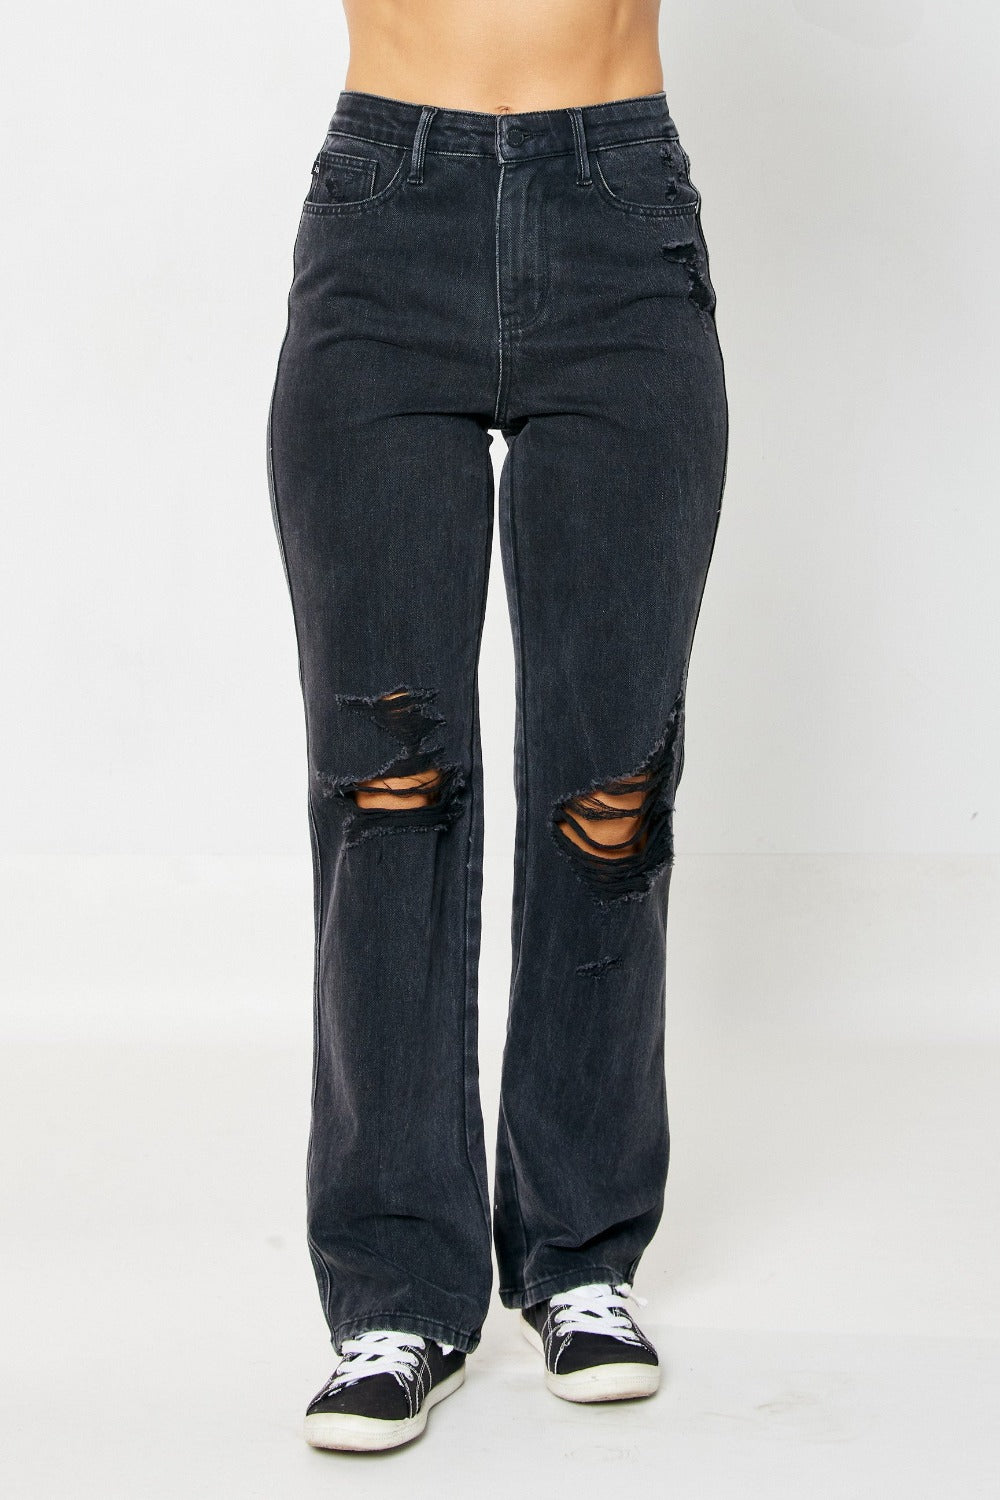 High Waist Rigid 90s Style Black Denim Jeans by Judy Blue